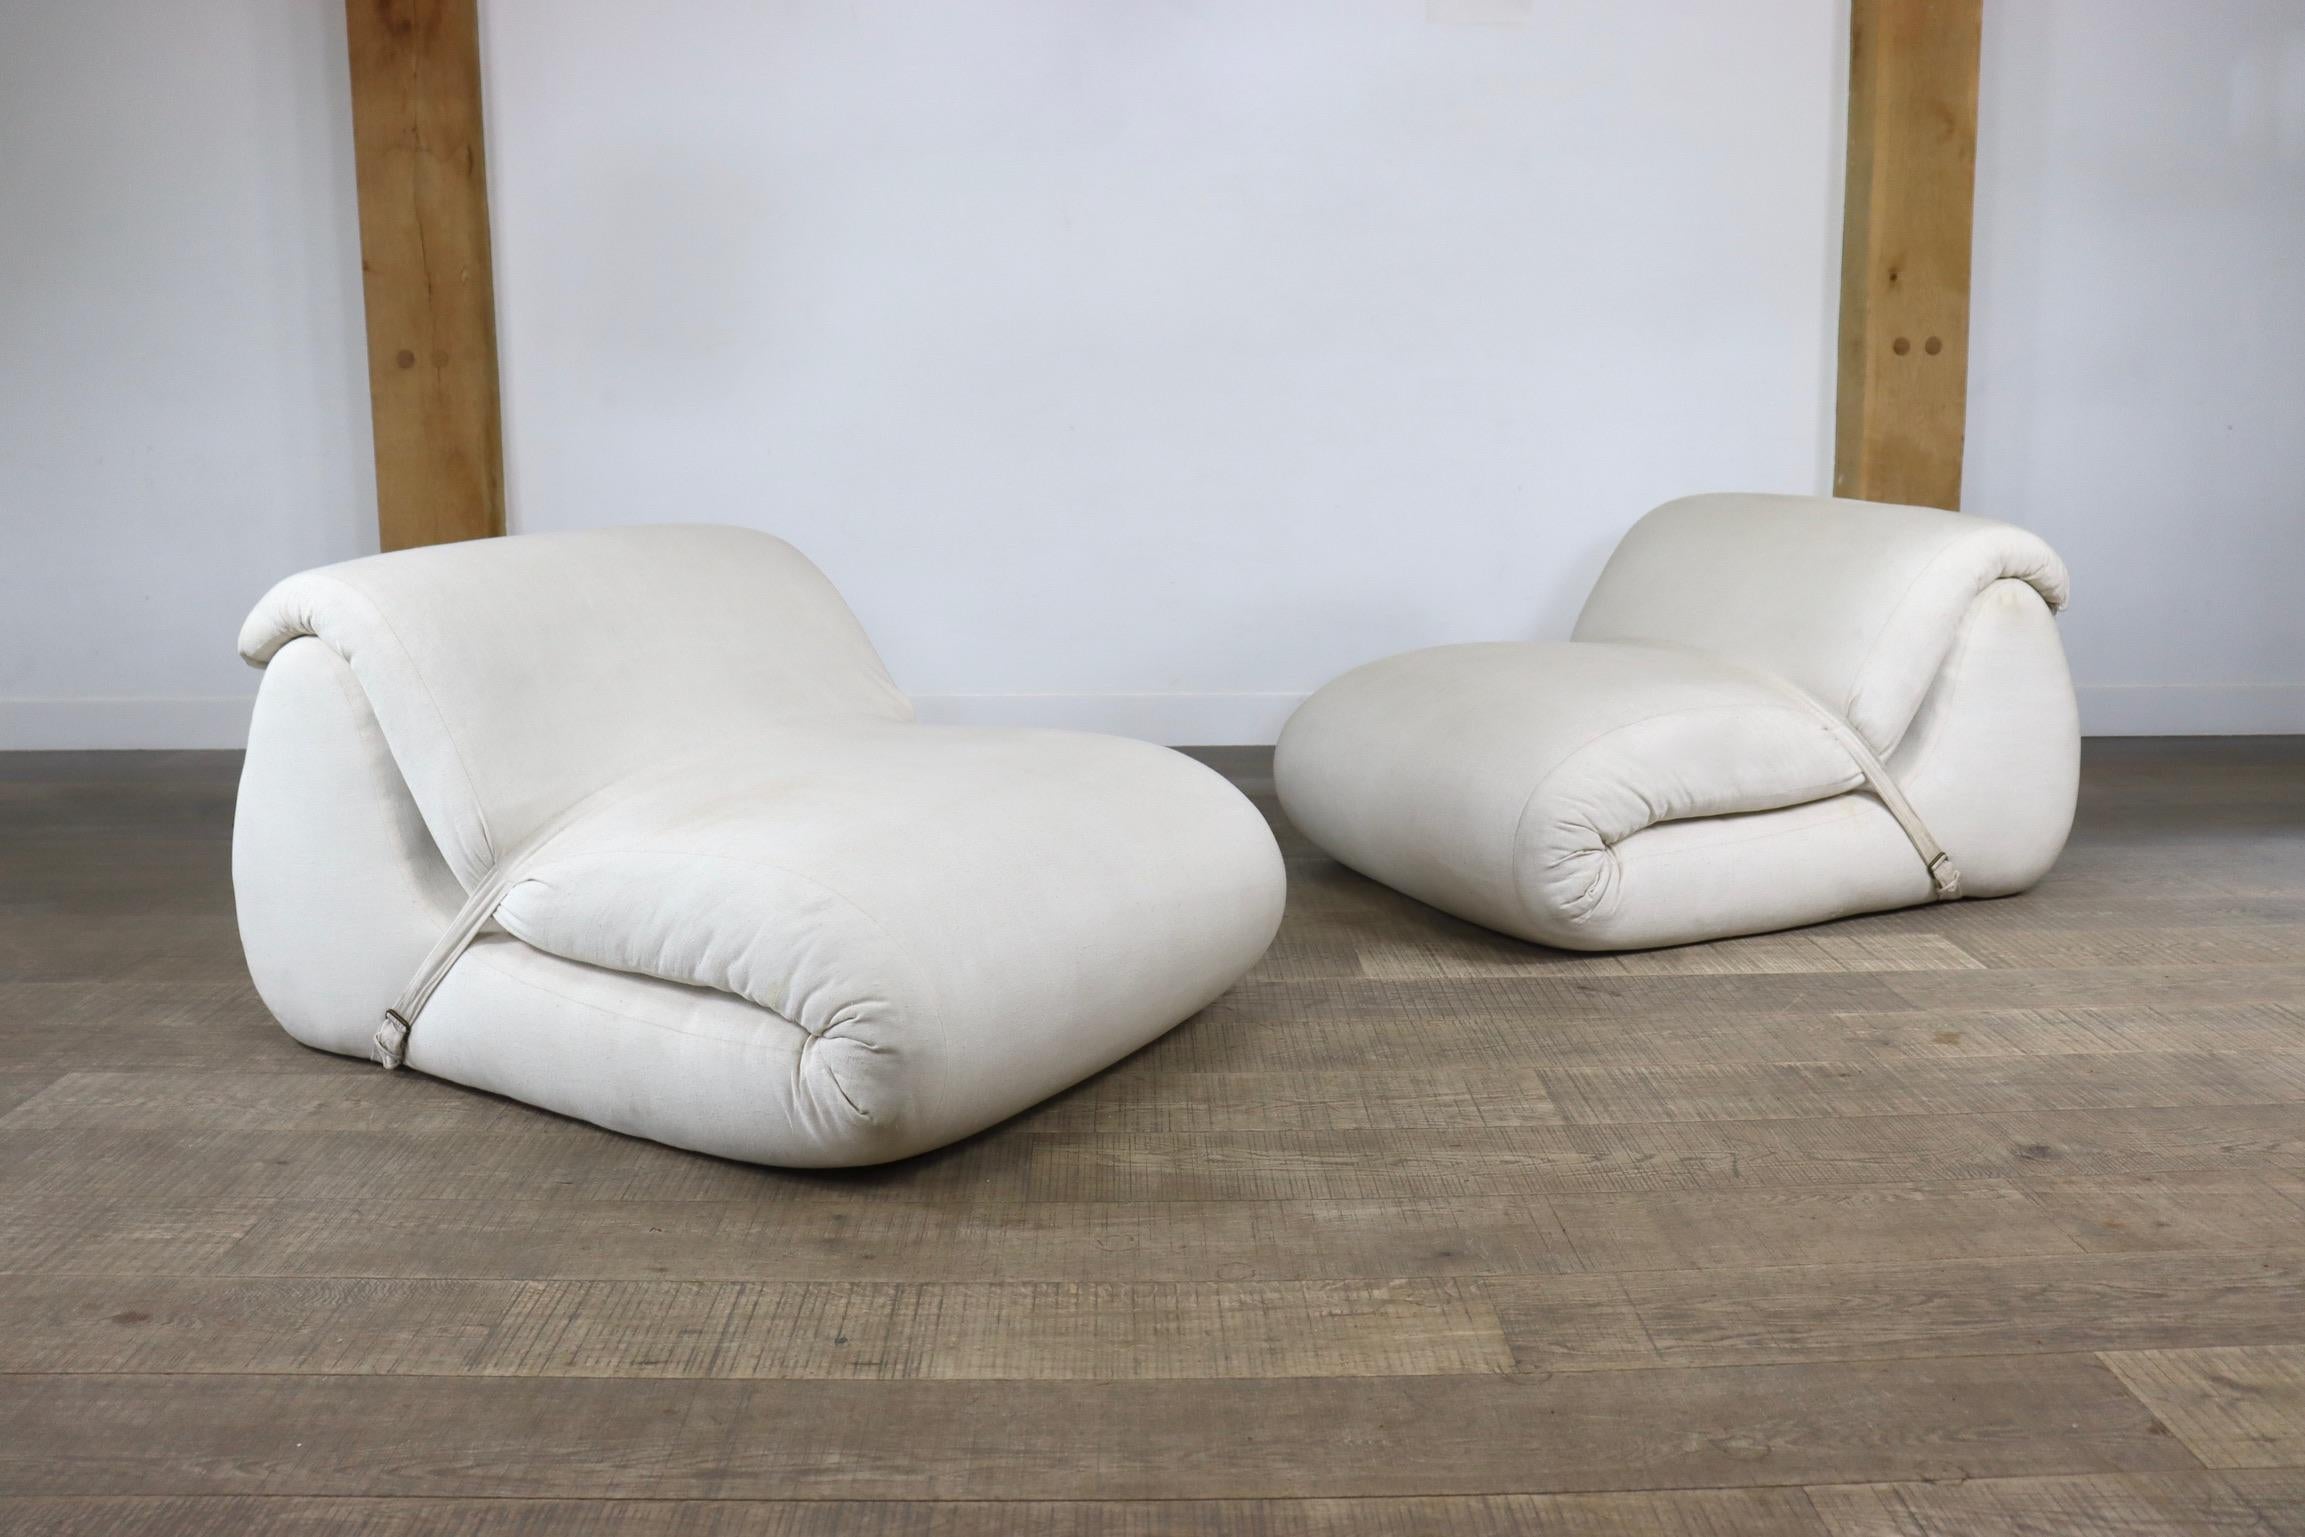 Pair of Ghiro Convertible lounge chairs by Umberto Catalano and Gianfranco Masi, 1